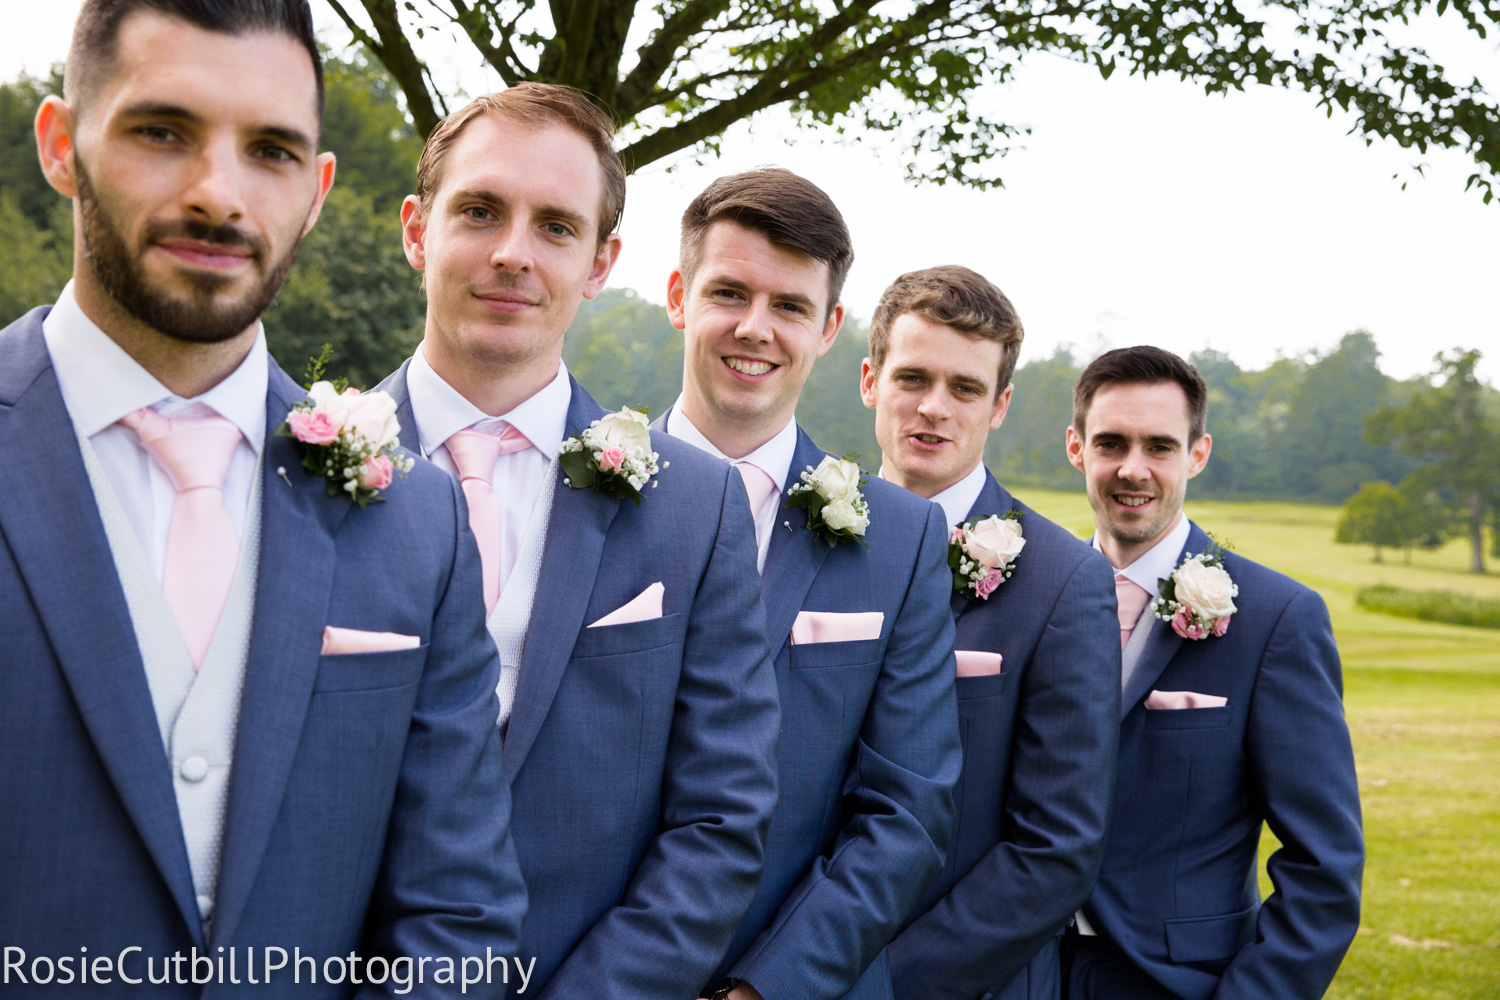 Wedding blog bamboozled by photography styles photographers help groomsman